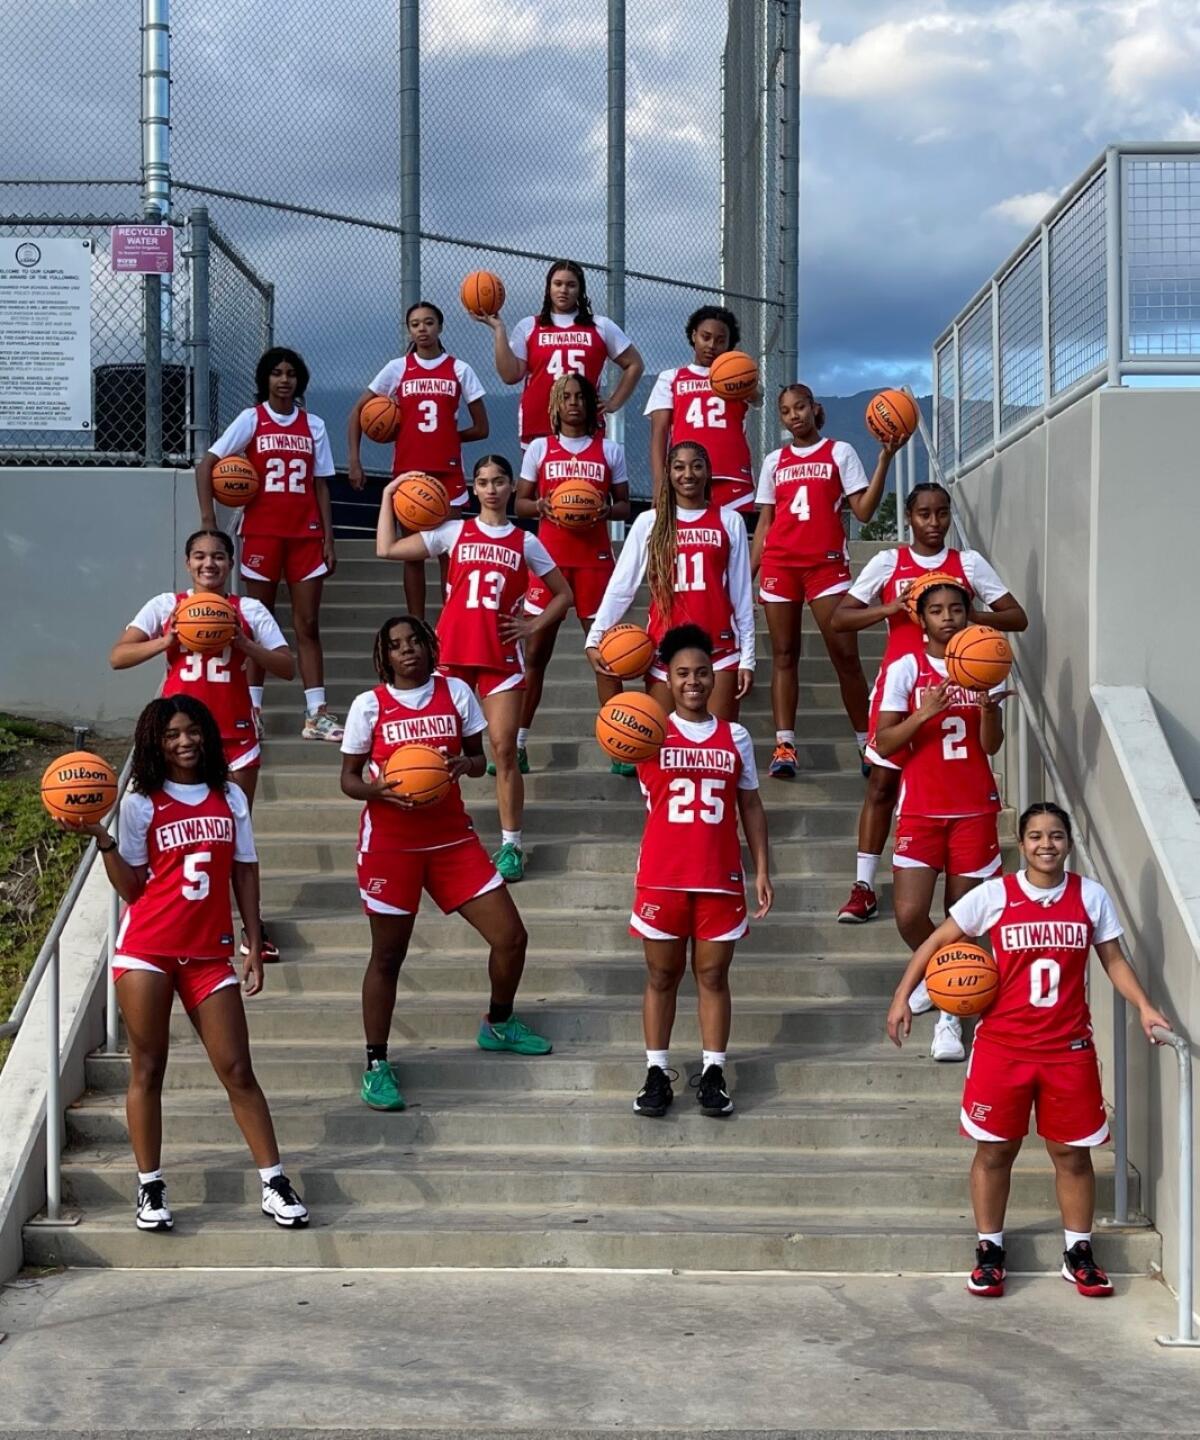 Etiwanda, coming off a 29-1 season, will challenge Sierra Canyon in girls' basketball.